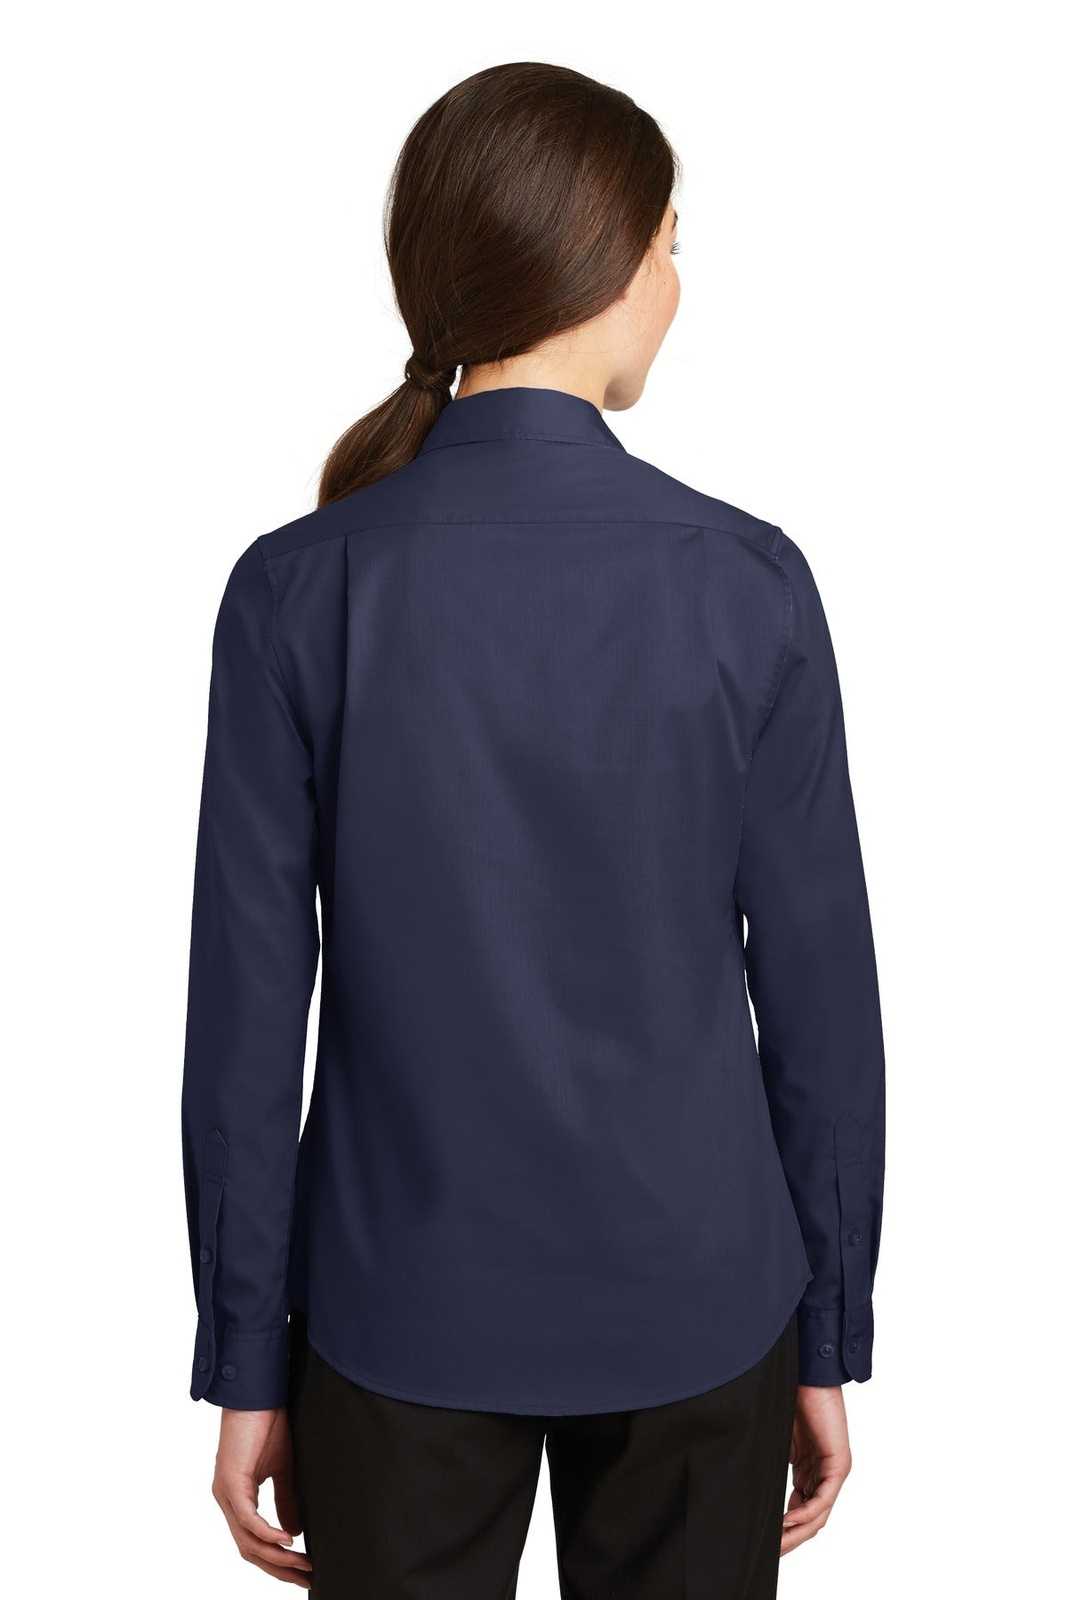 Port Authority L663 Ladies Superpro Twill Shirt - True Navy - HIT a Double - 1